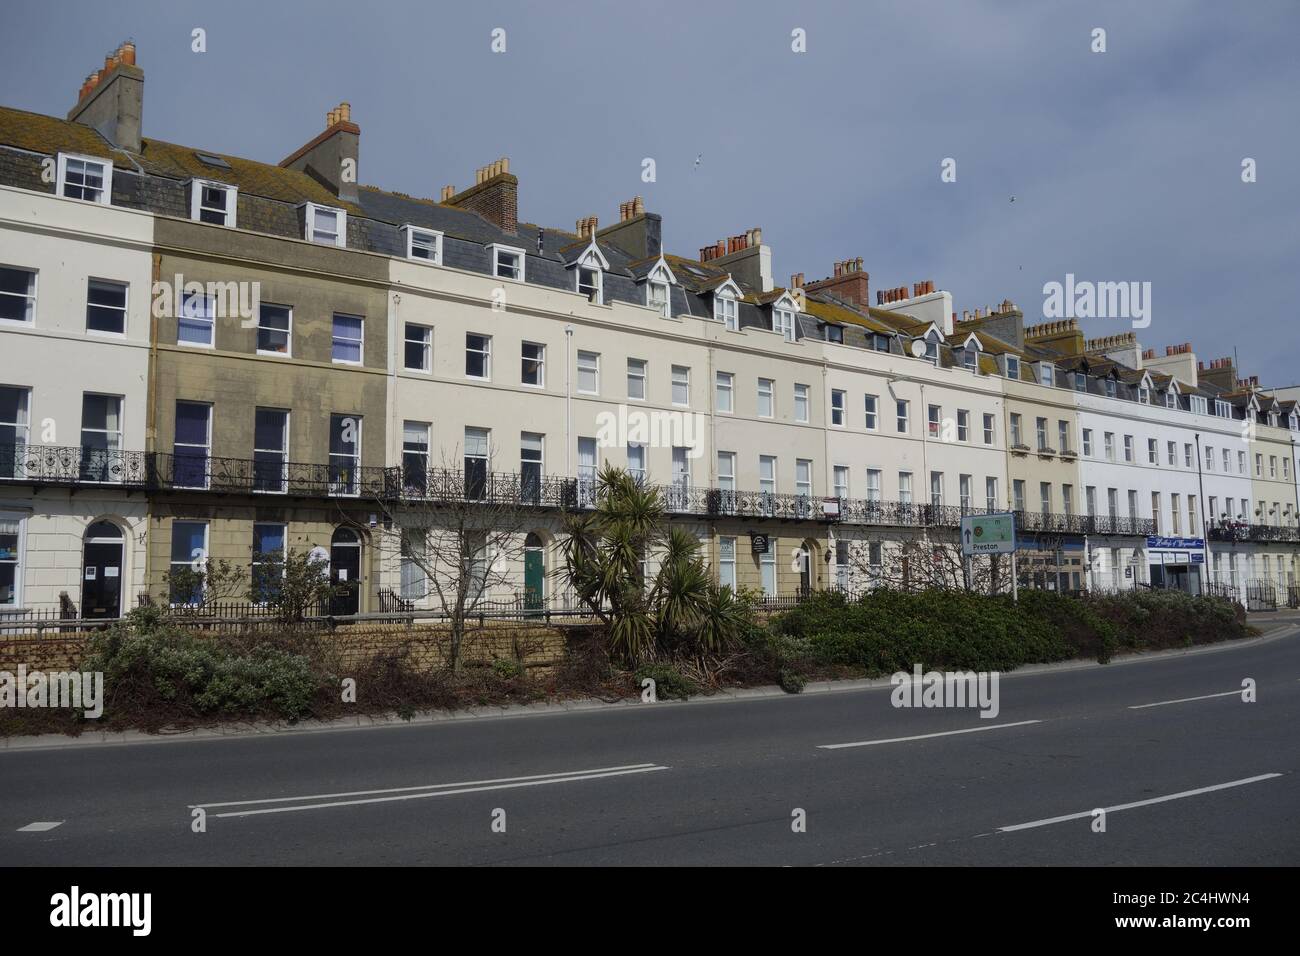 Maisons d'architecture géorgienne B and B promenade front de mer weymouth, dorset, angleterre, gb Banque D'Images